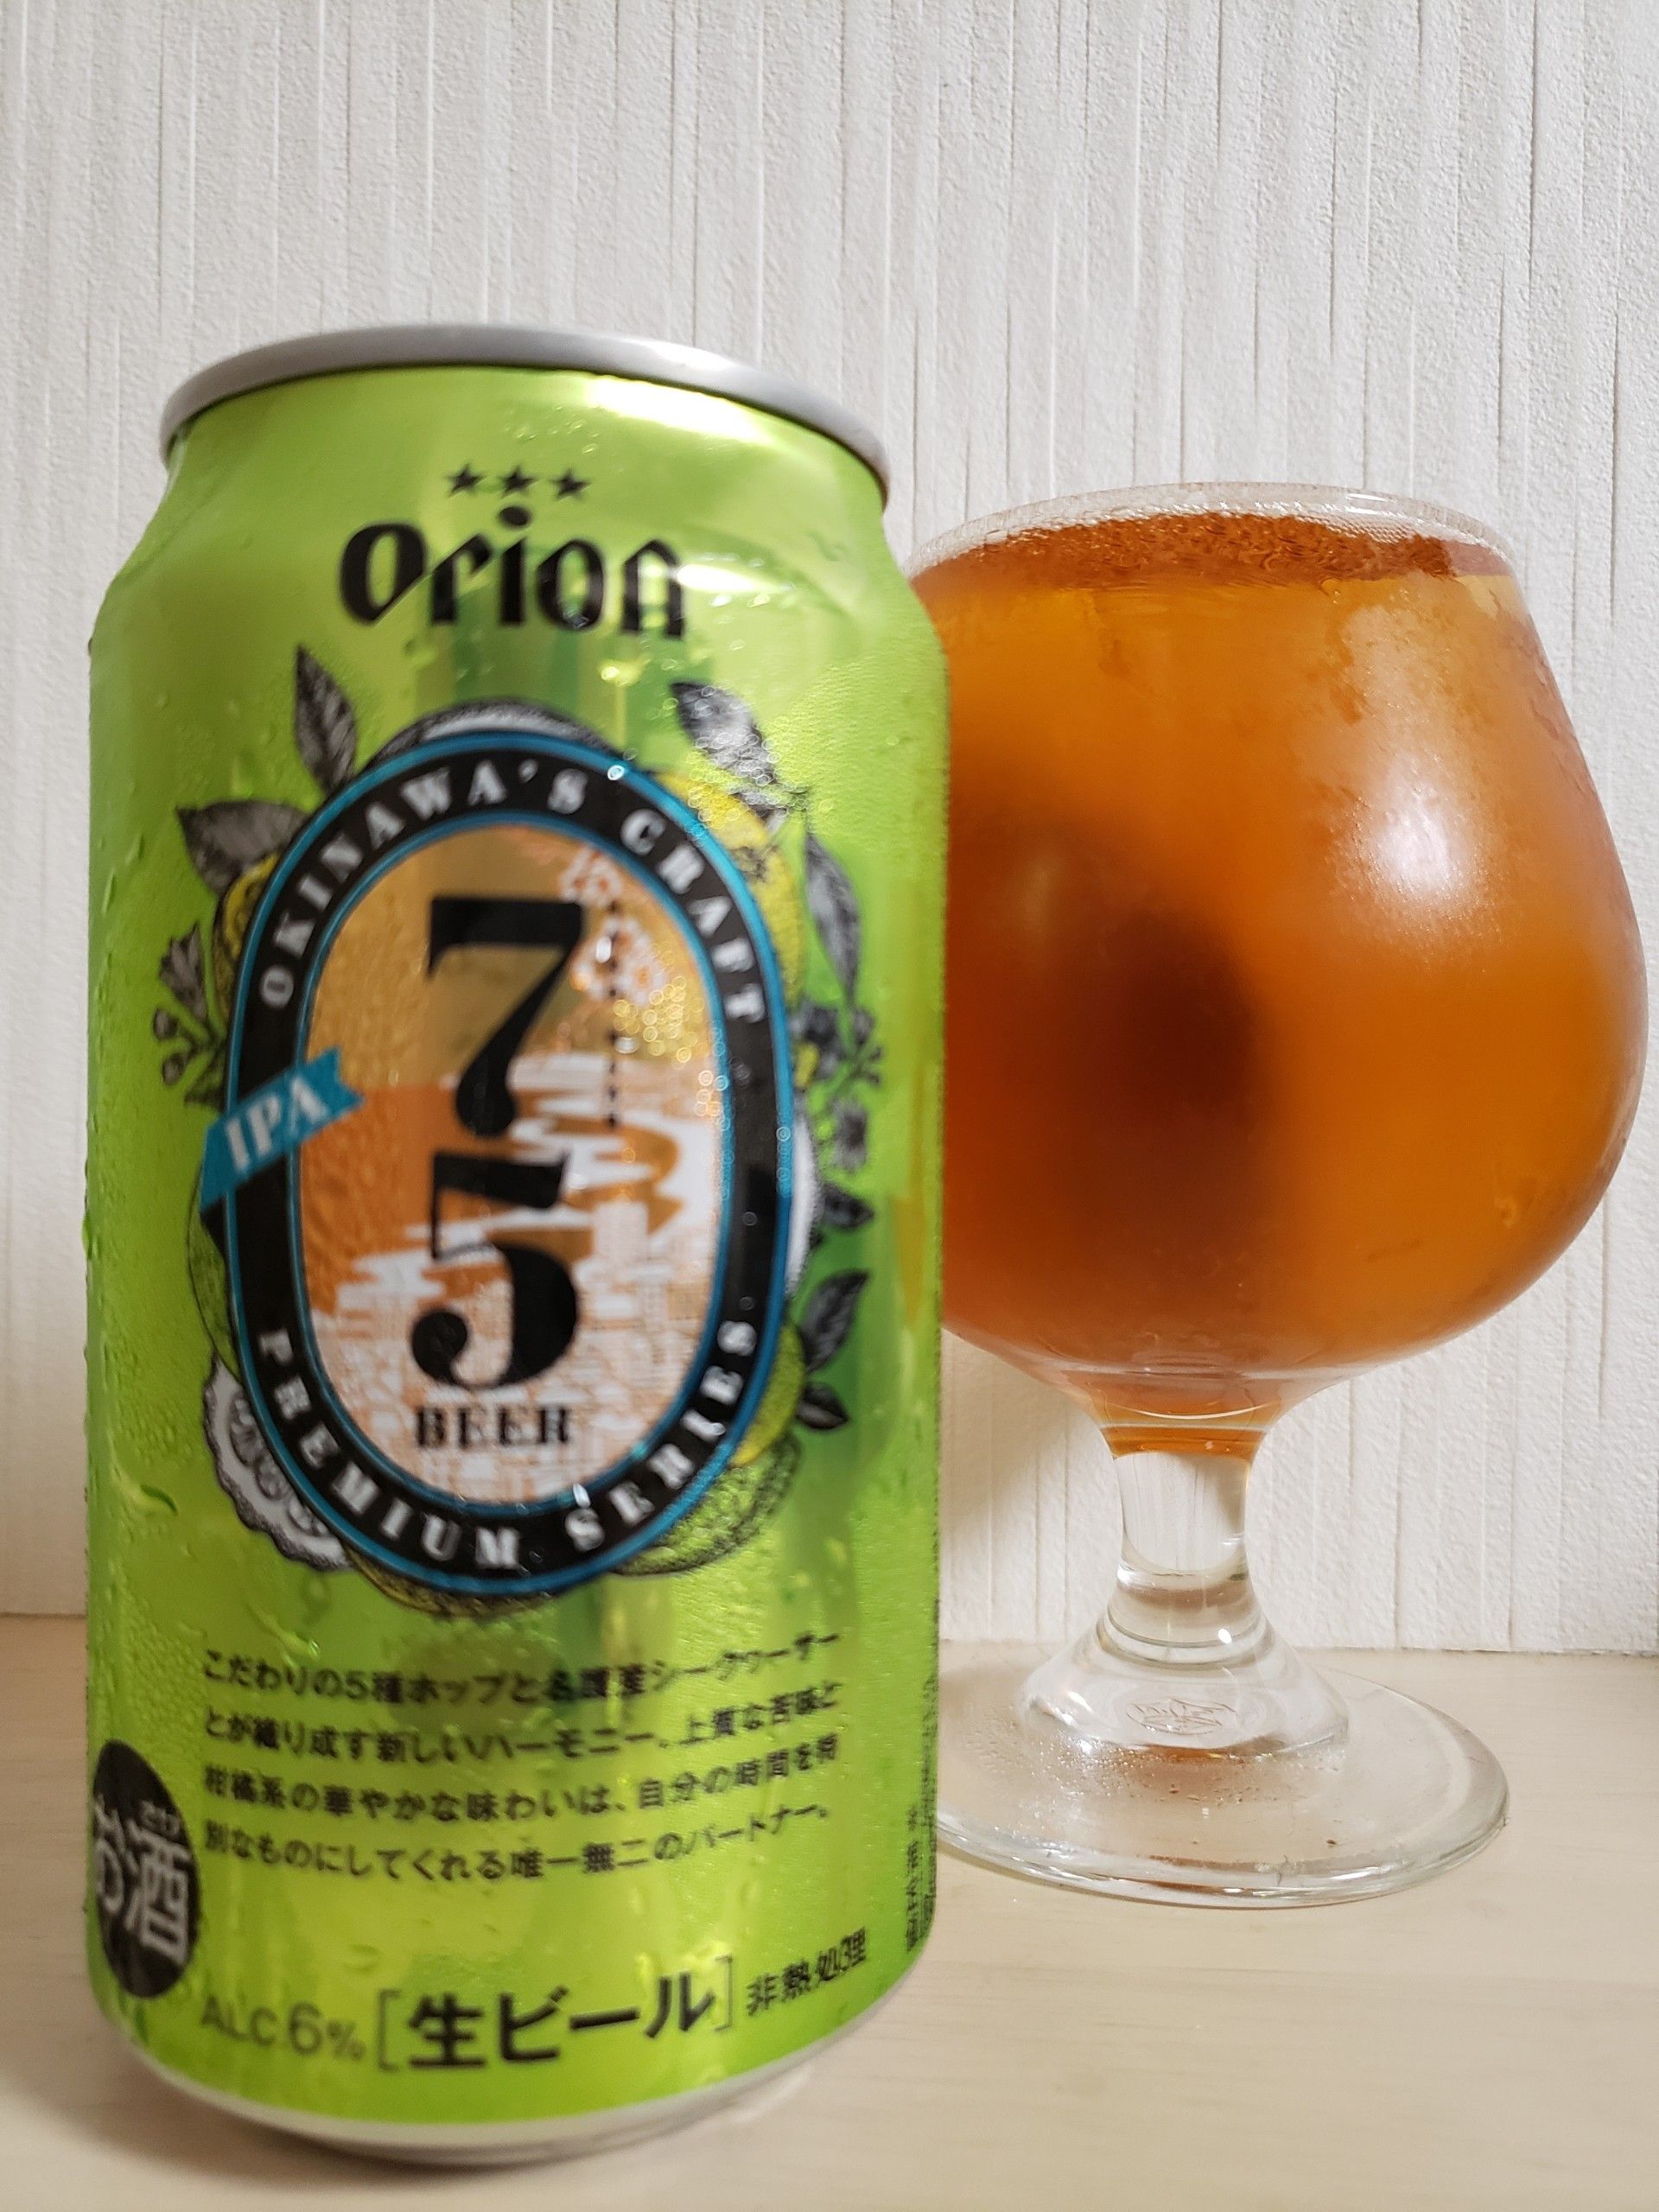 75 Beer Ipa 沖縄県オリオンビール Beer Beer Beer 楽天ブログ